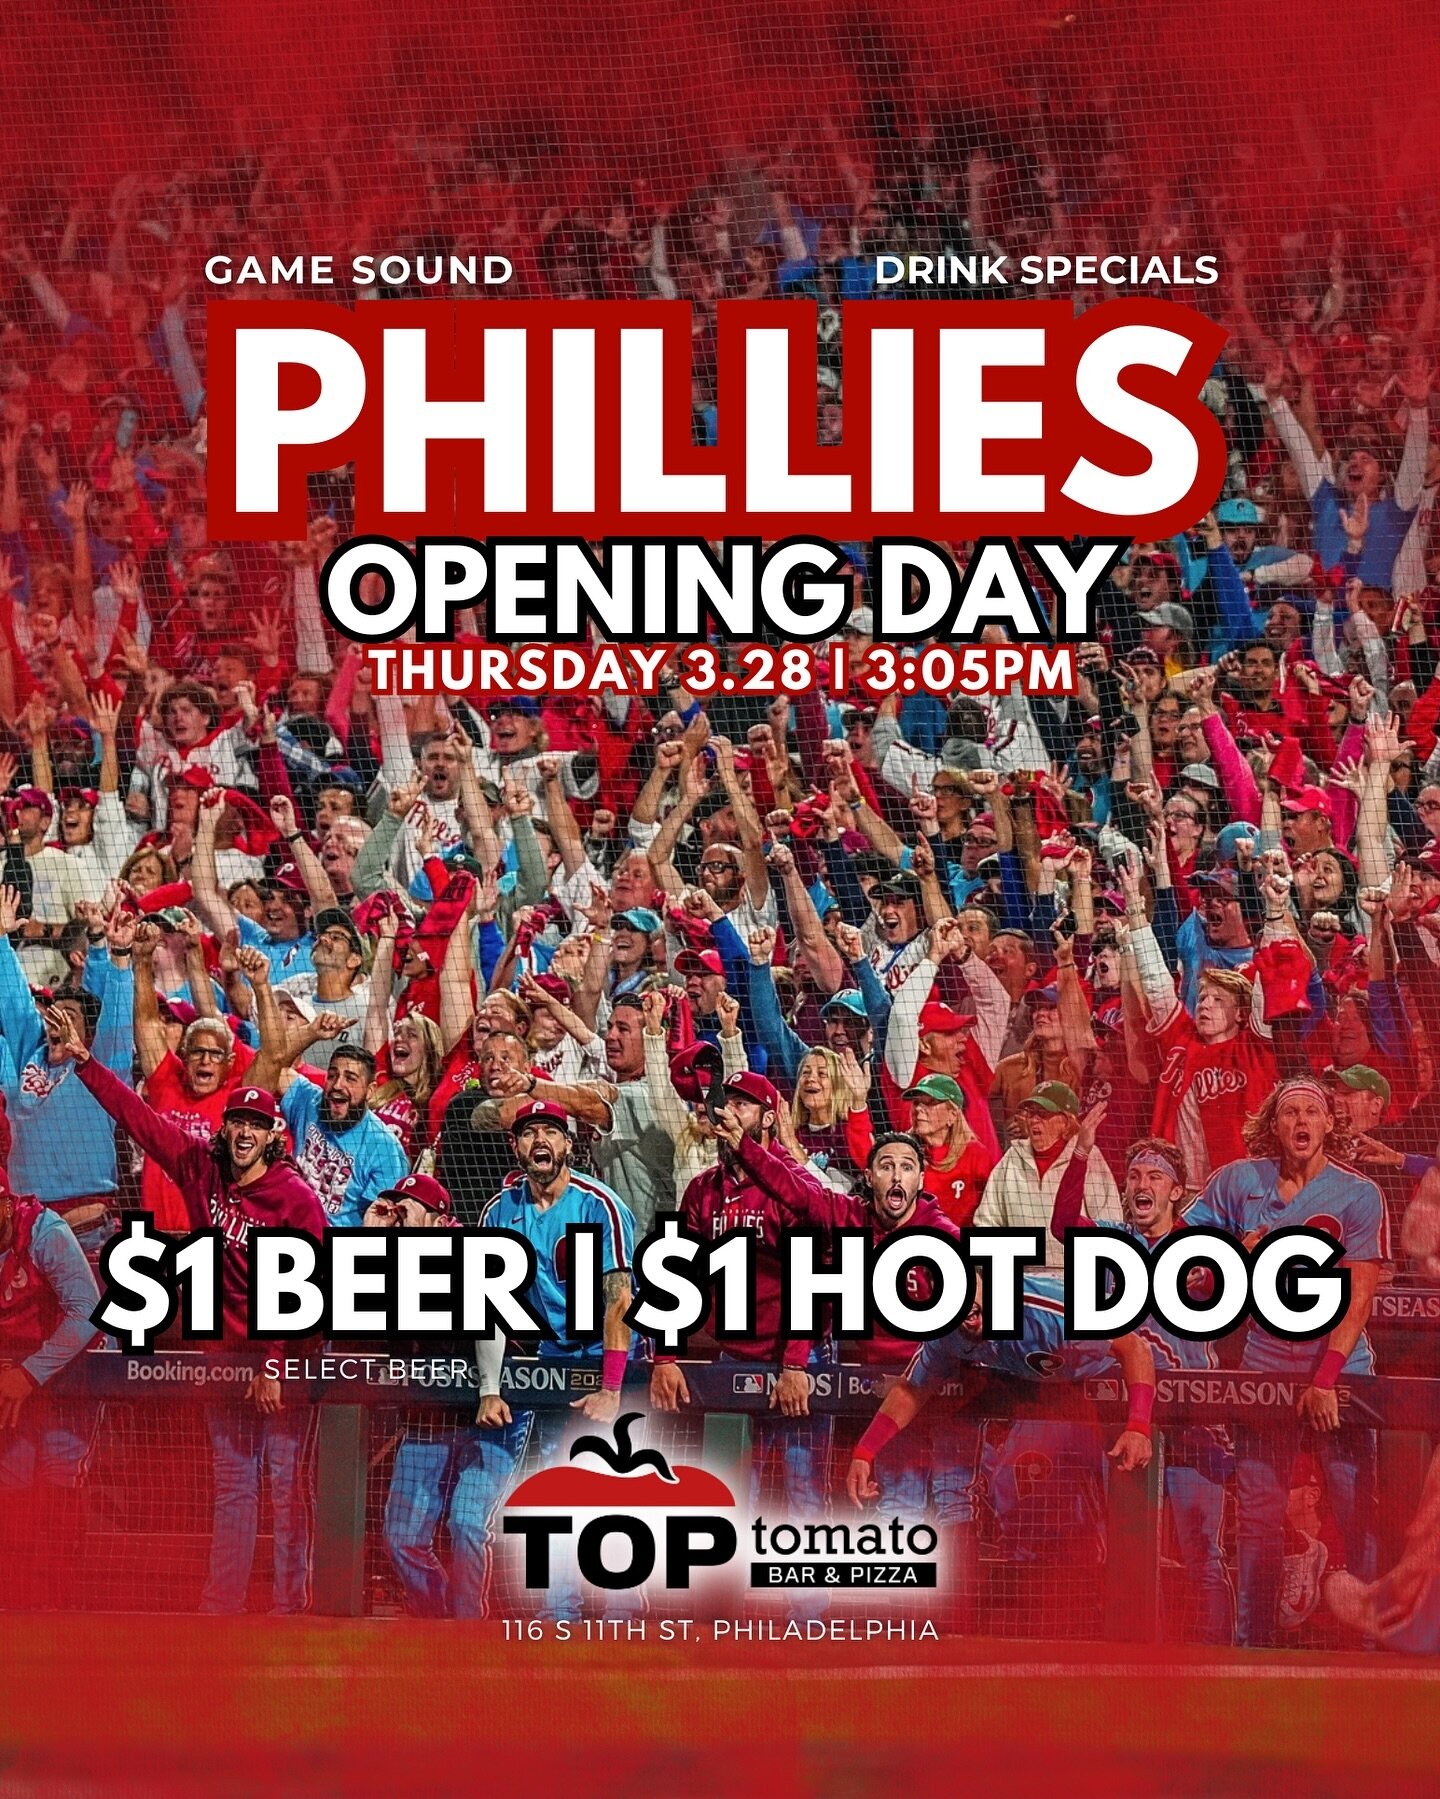 Phillies Opening Day! ⚾️ This Thursday 3:05pm | $1 Dogs &amp; $1 Select Beer! #Phillies #DollarDogNight 
.
.
.
.
#toptomato #baseball #openingday #sportsbar #phillysports #centecityphilly #philadelphiaphillies #philadelphia #mlb